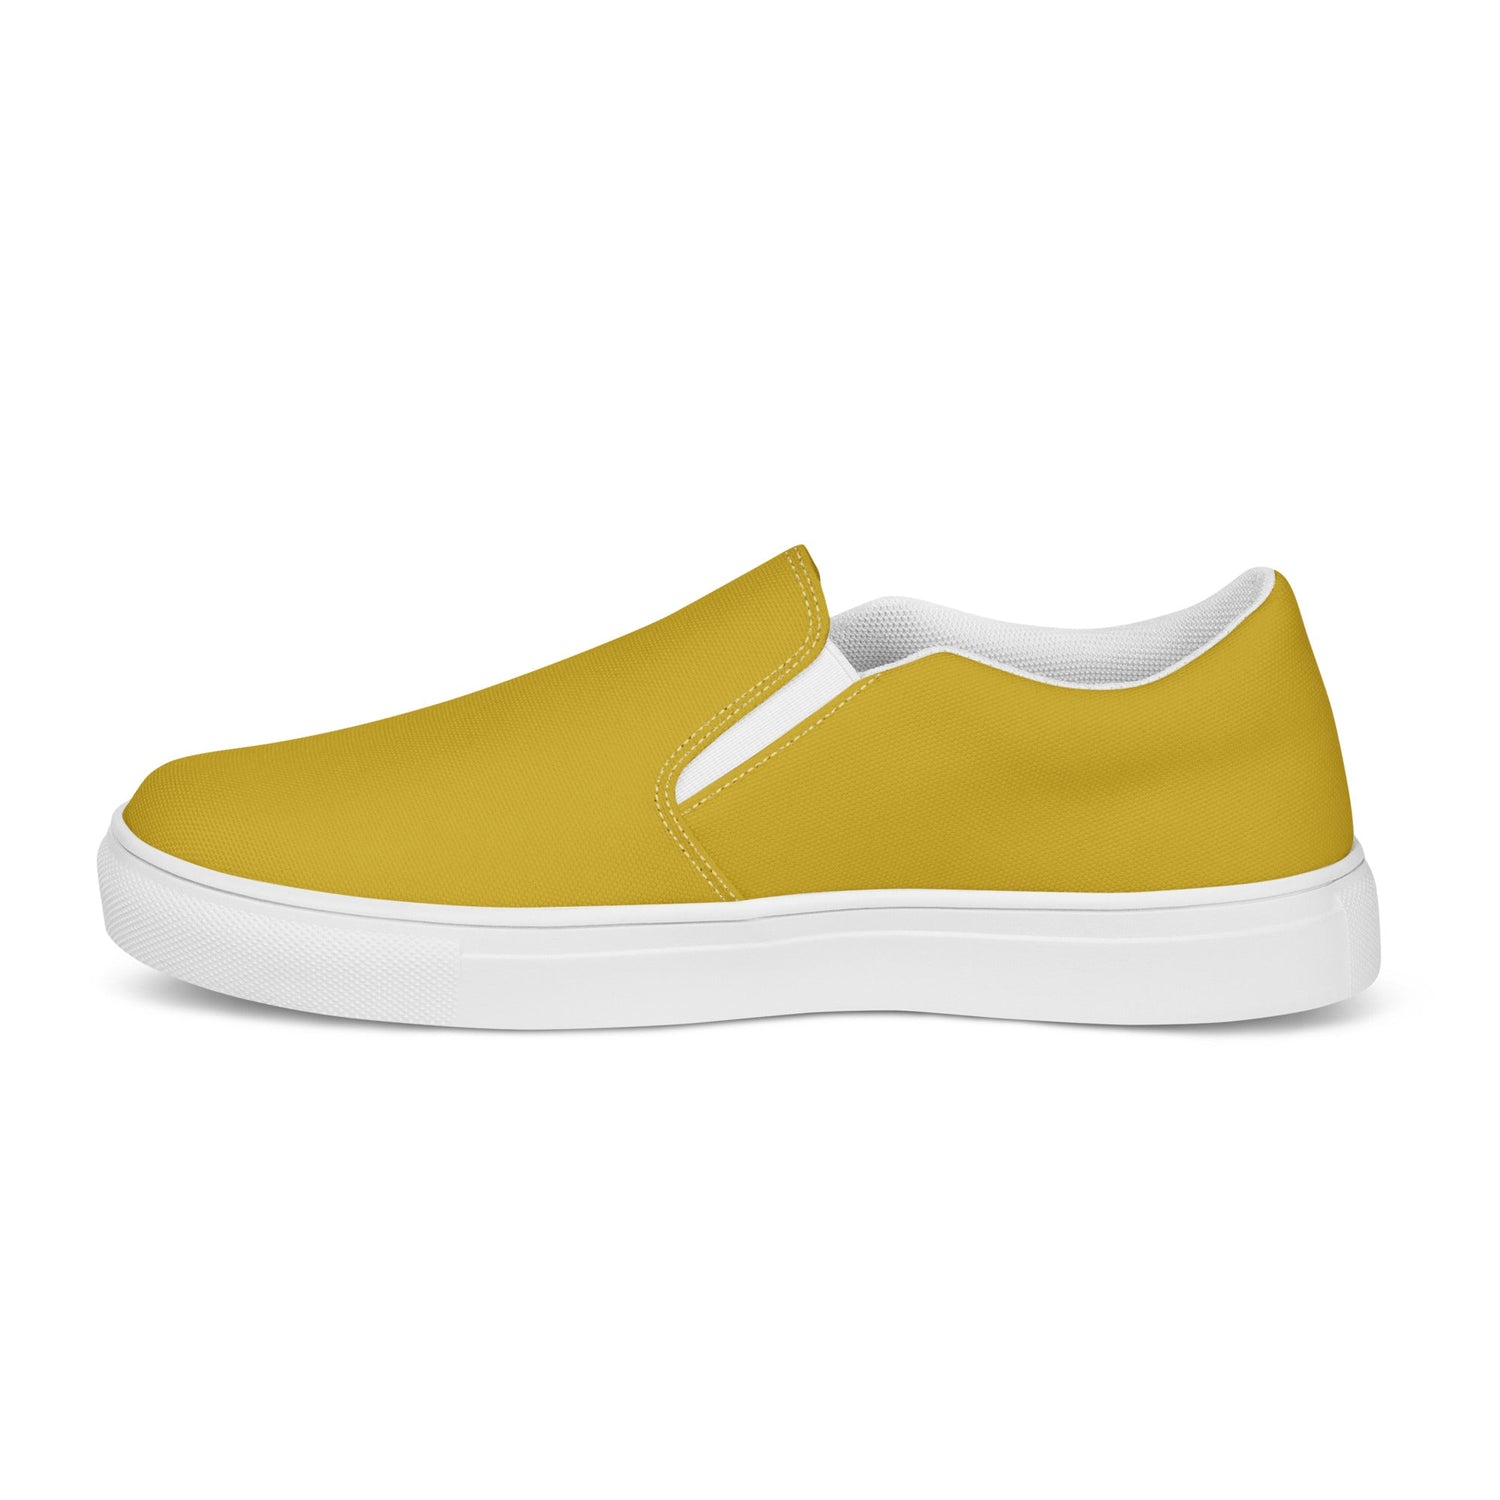 klasneakers Women’s slip-on canvas shoes - Gold